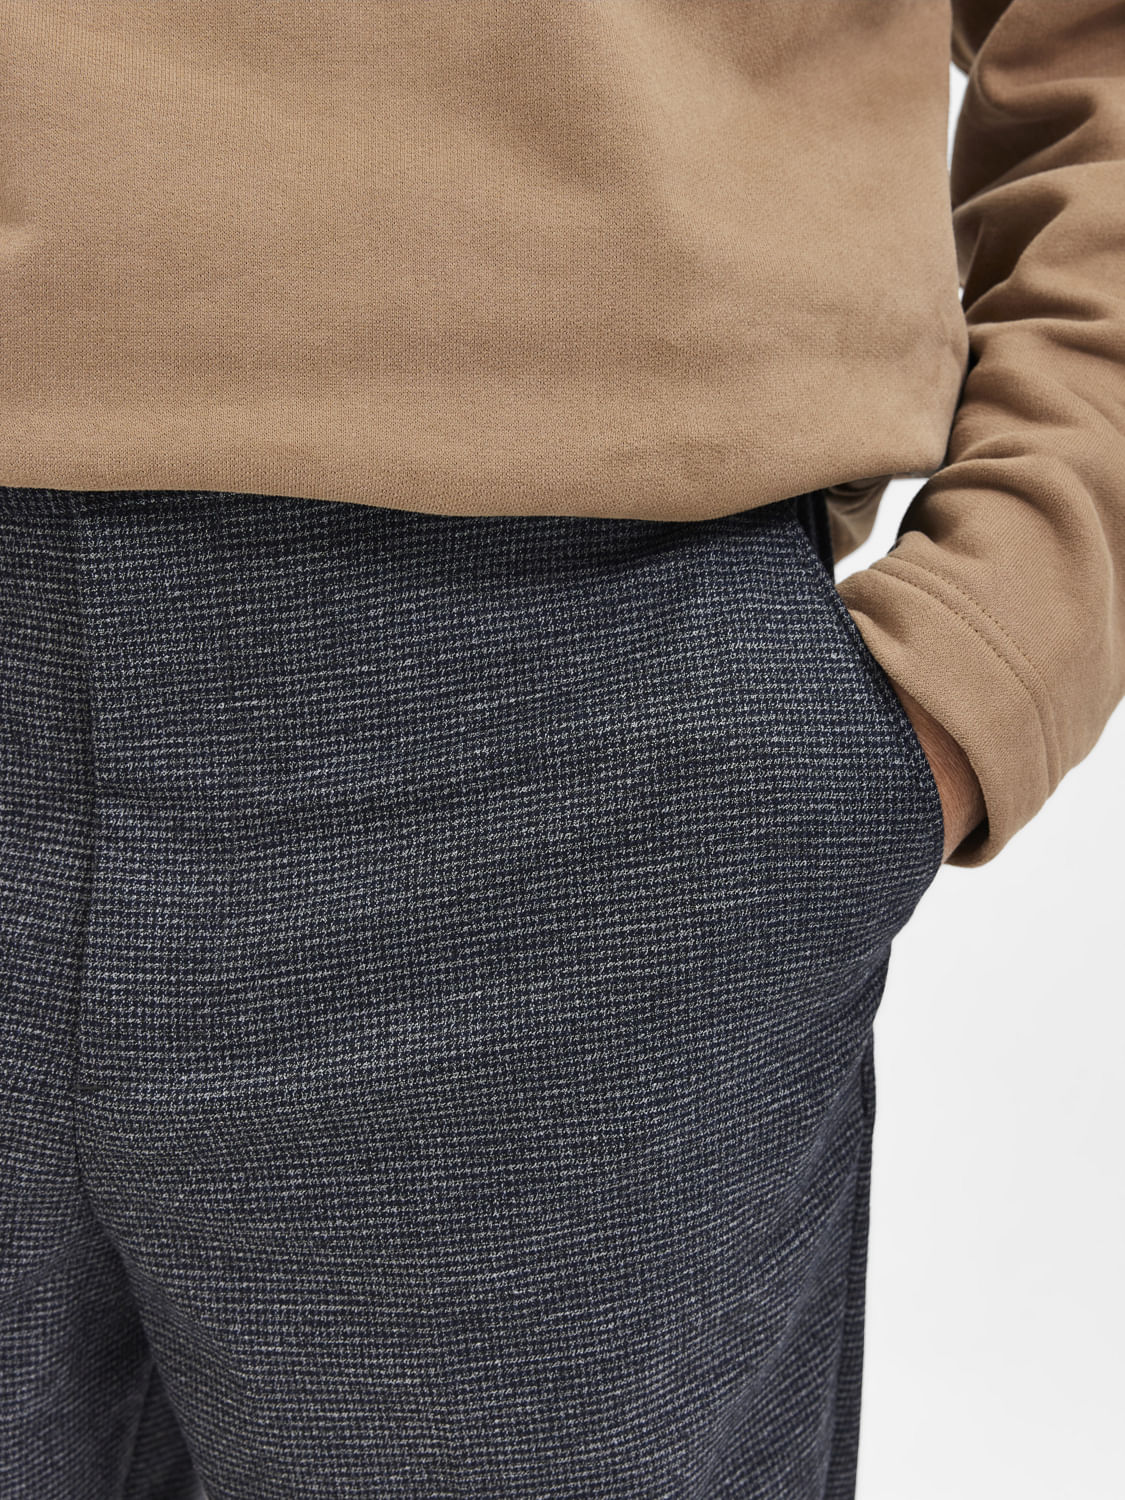 Check Formal Trousers In Grey B95 Walt